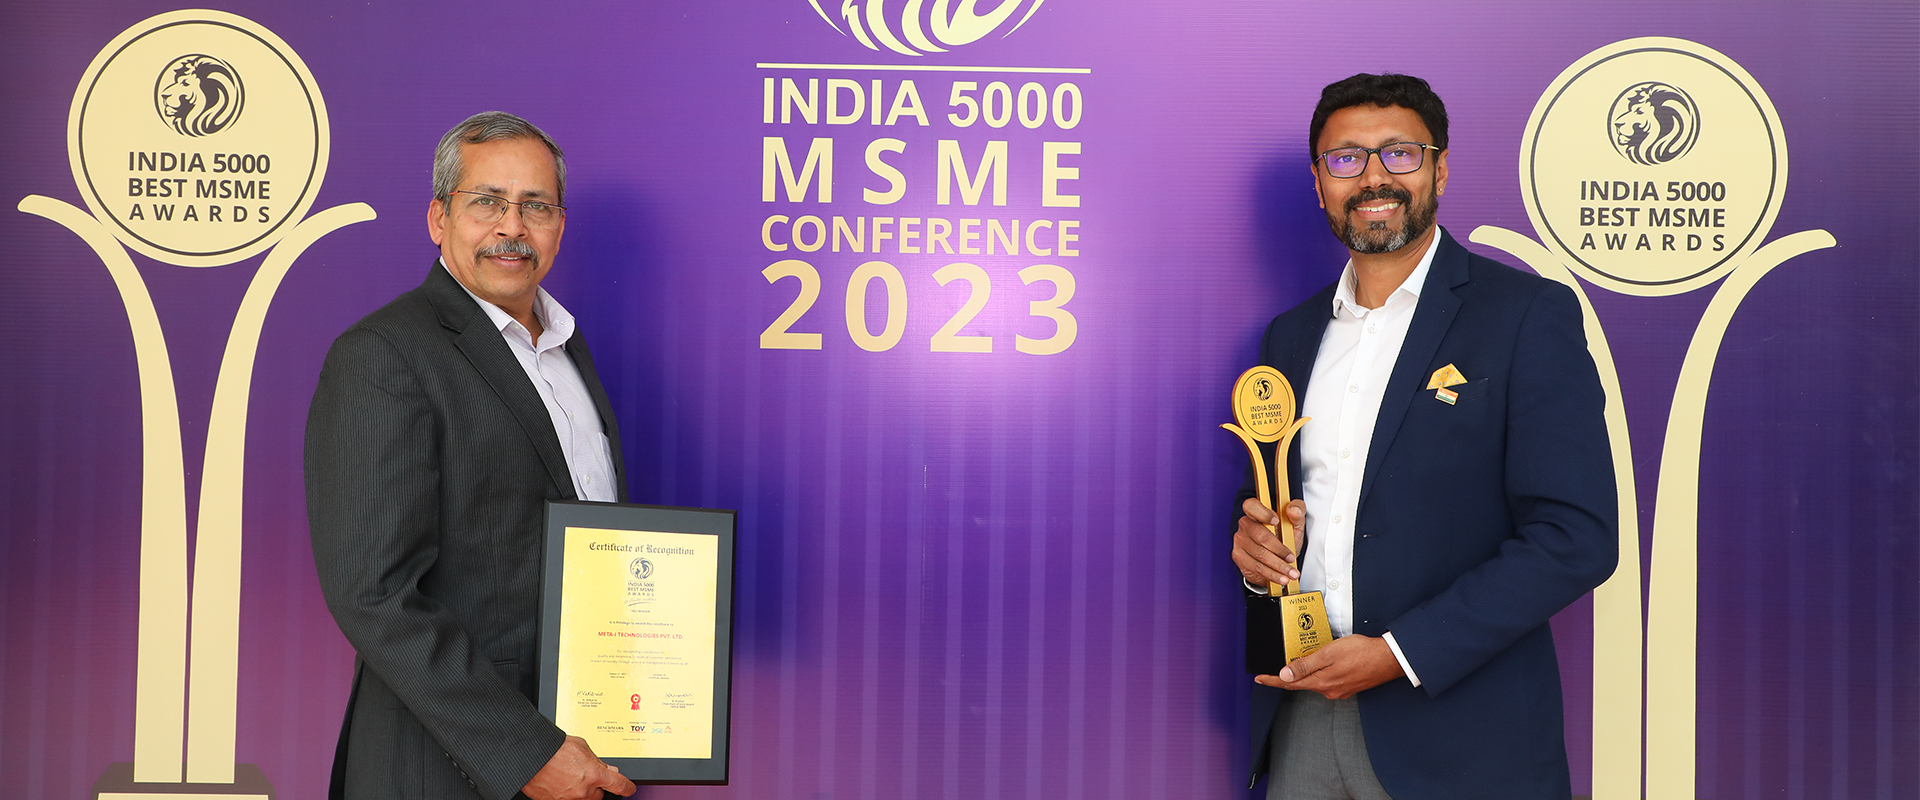 meta-i-technologies-bags-india-5000-best-msme-award-2023